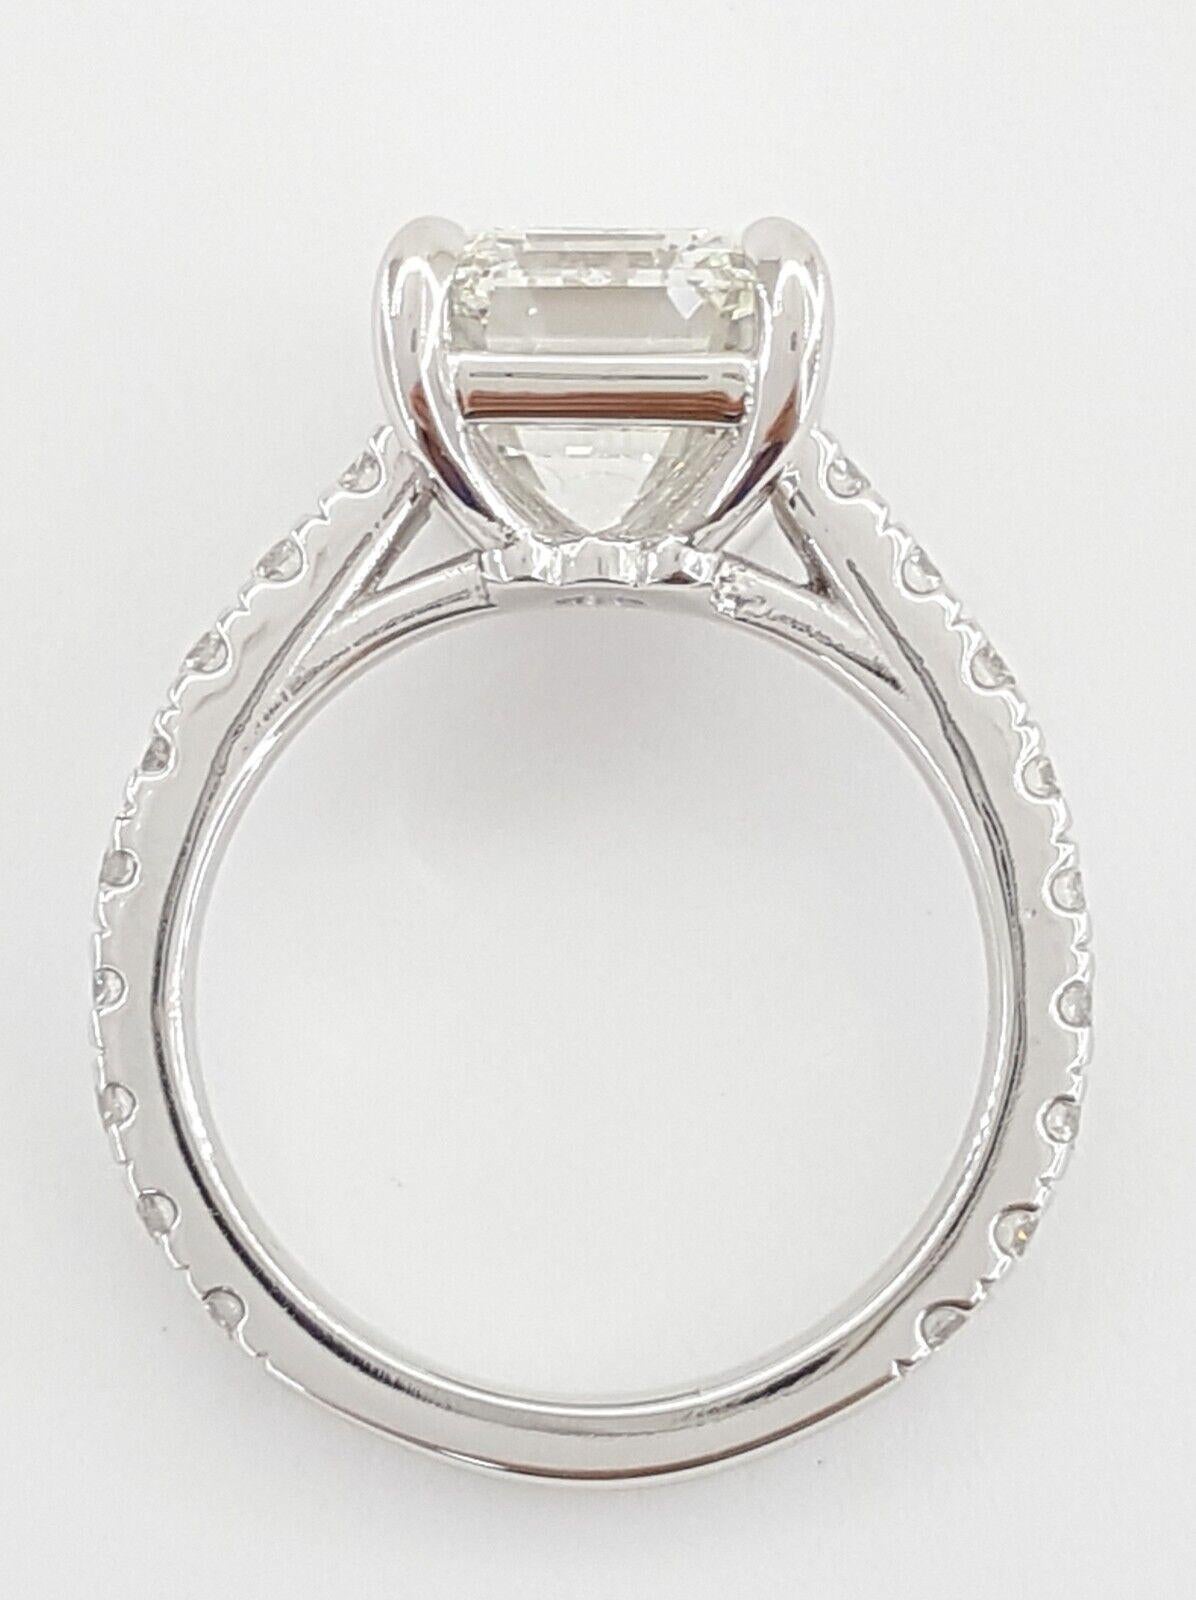 emerald cut diamond ring 5 carat